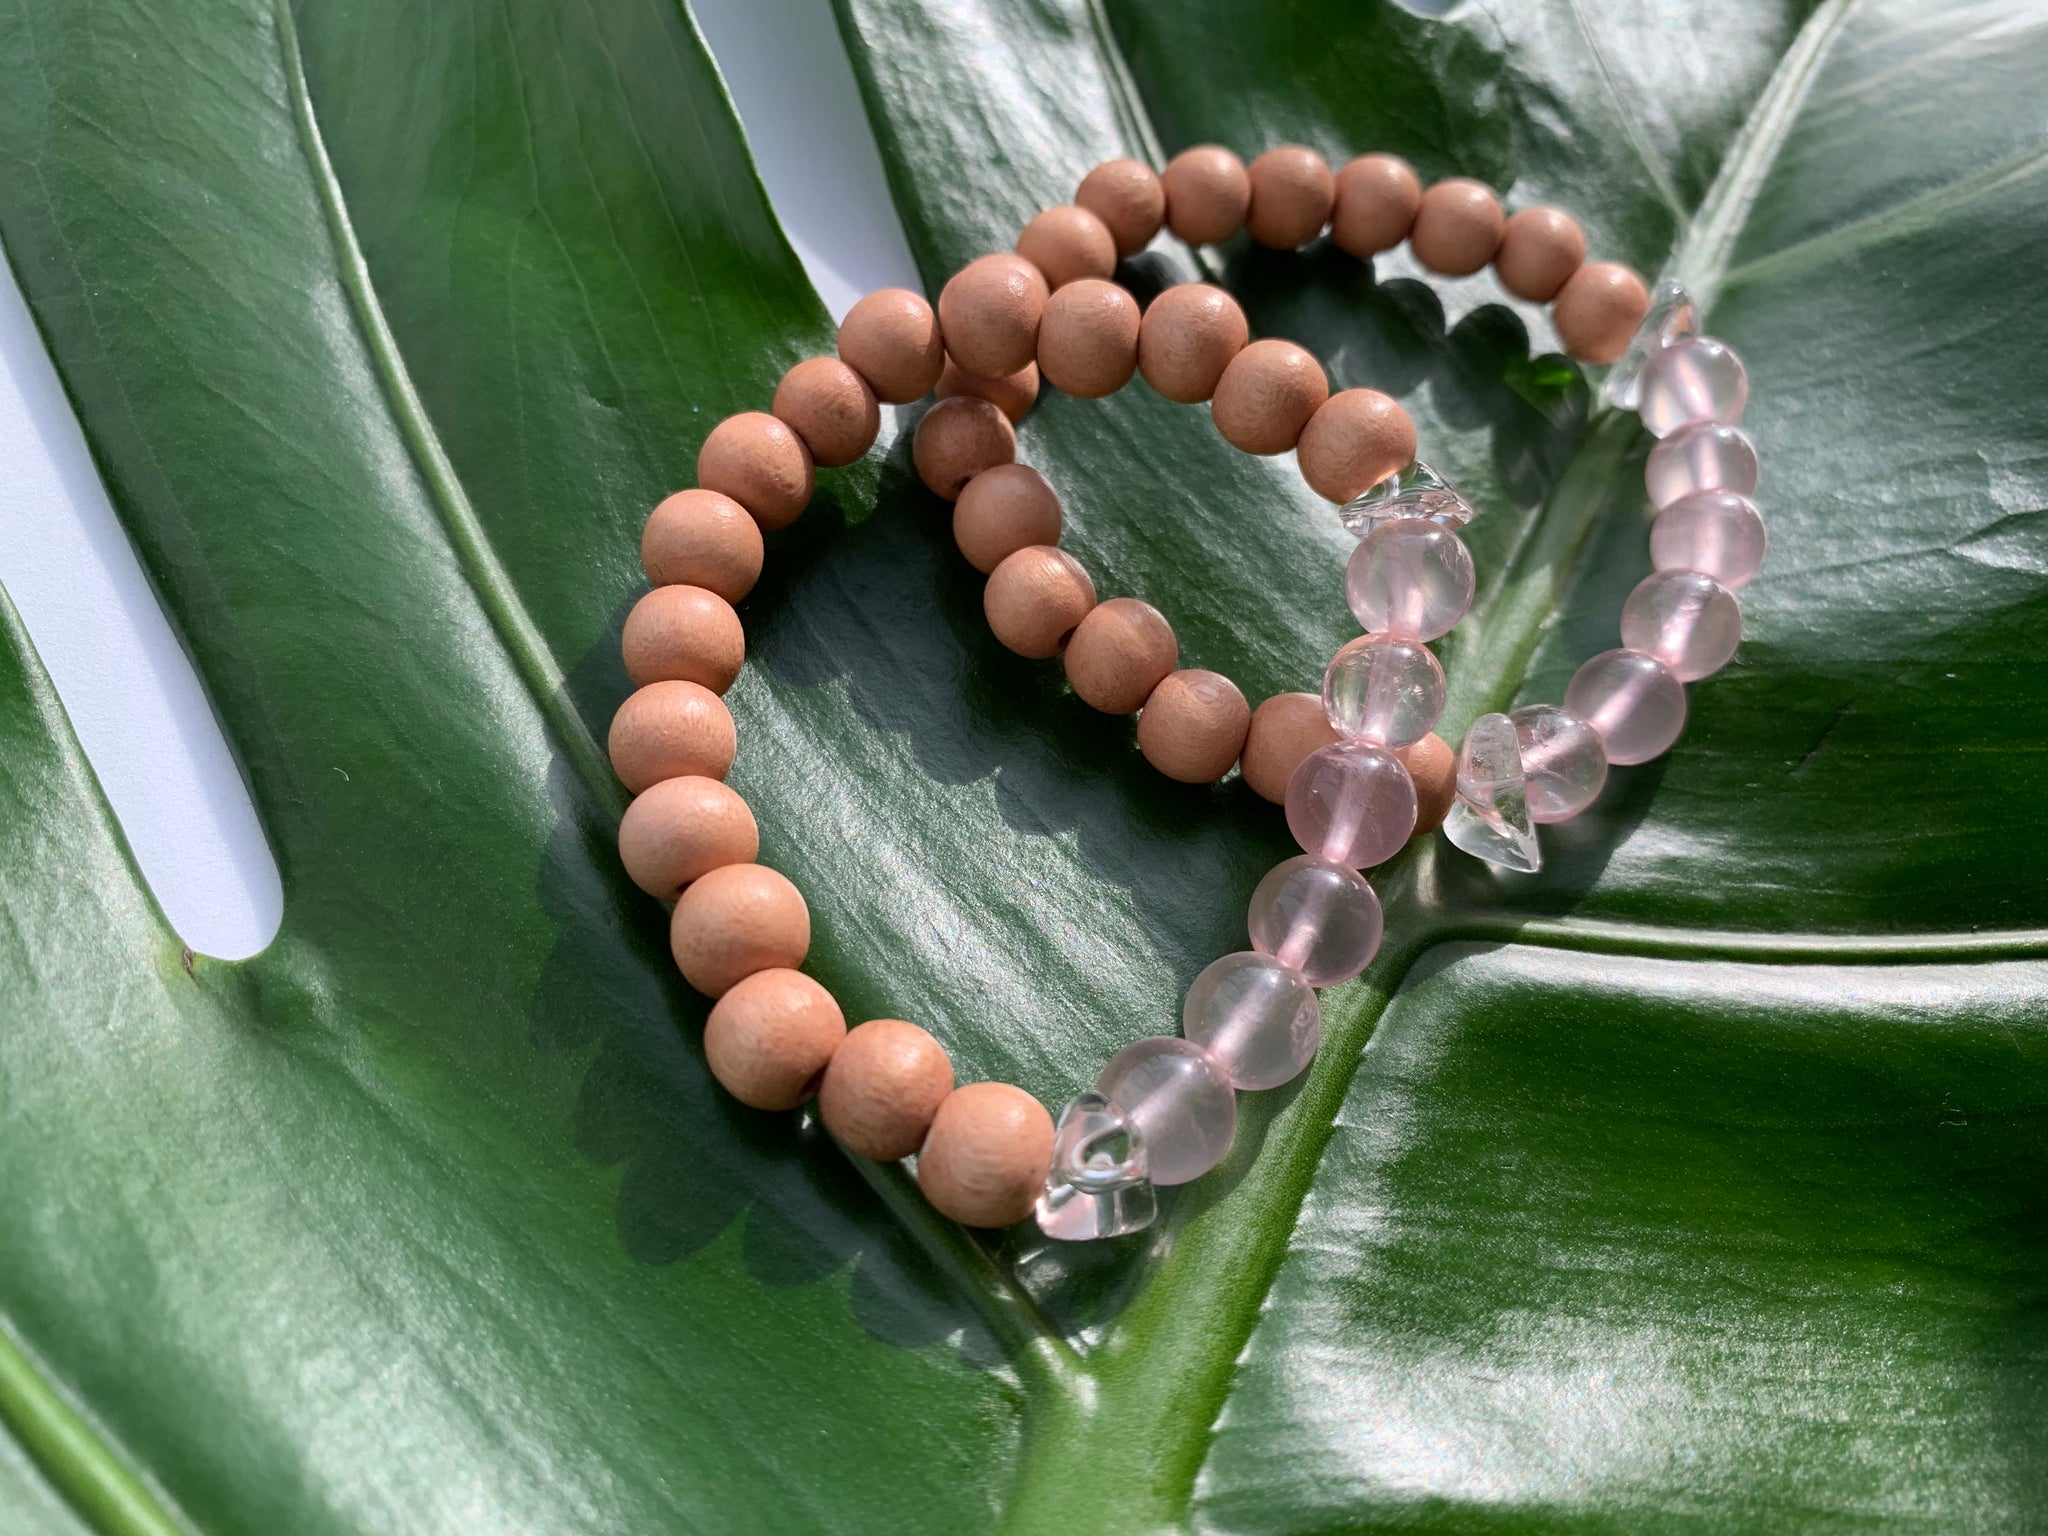 Rose Quartz Healing Crystal & Sandalwood Beads Bracelet – Moana Treasures